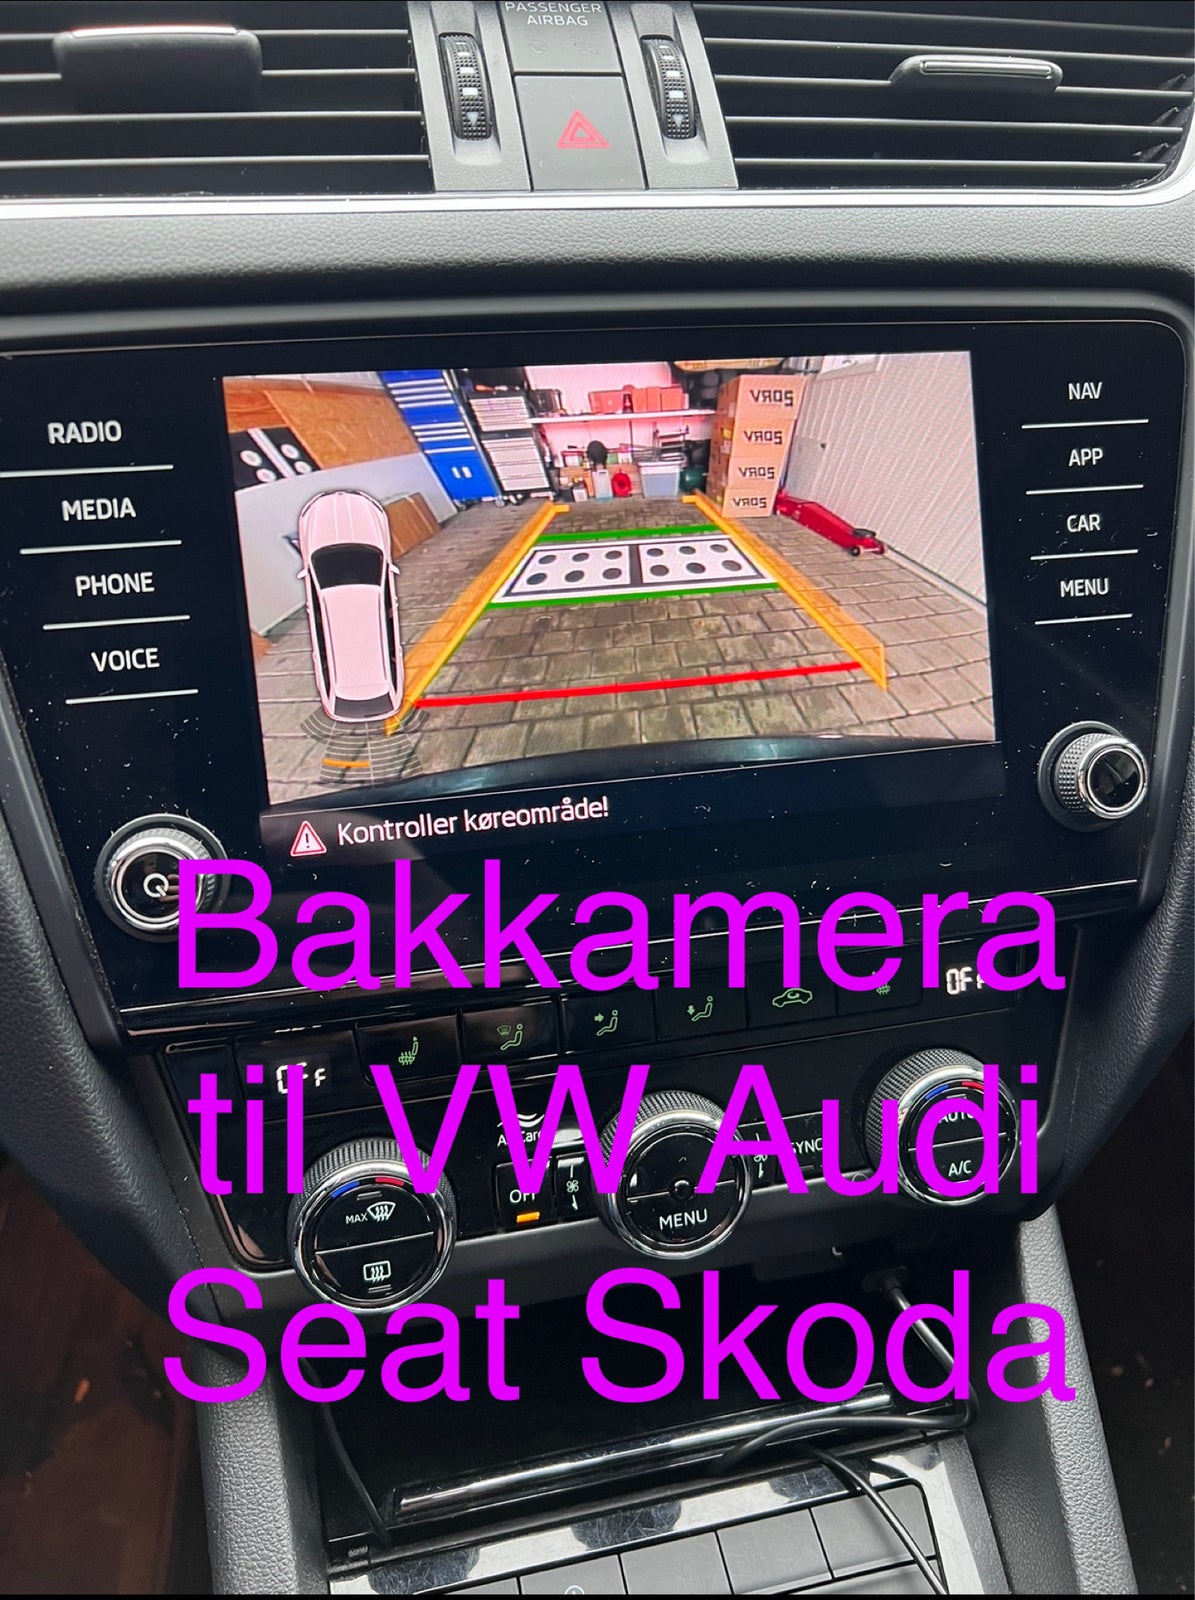 Bakkamera, Audi Audi Seat Skoda VW bakkamera